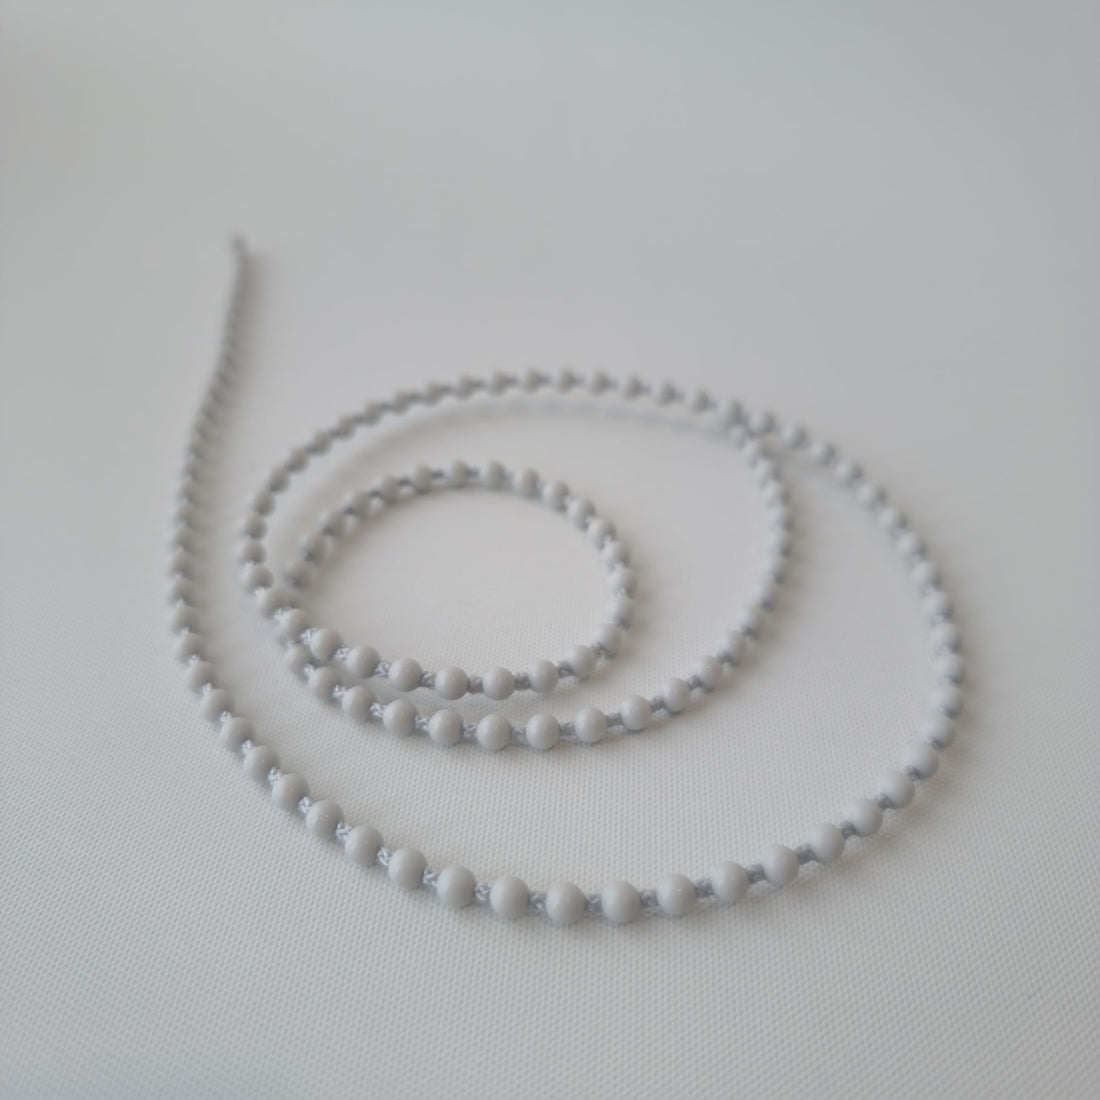 Roller Blind plastic chain - 10 metres - grey